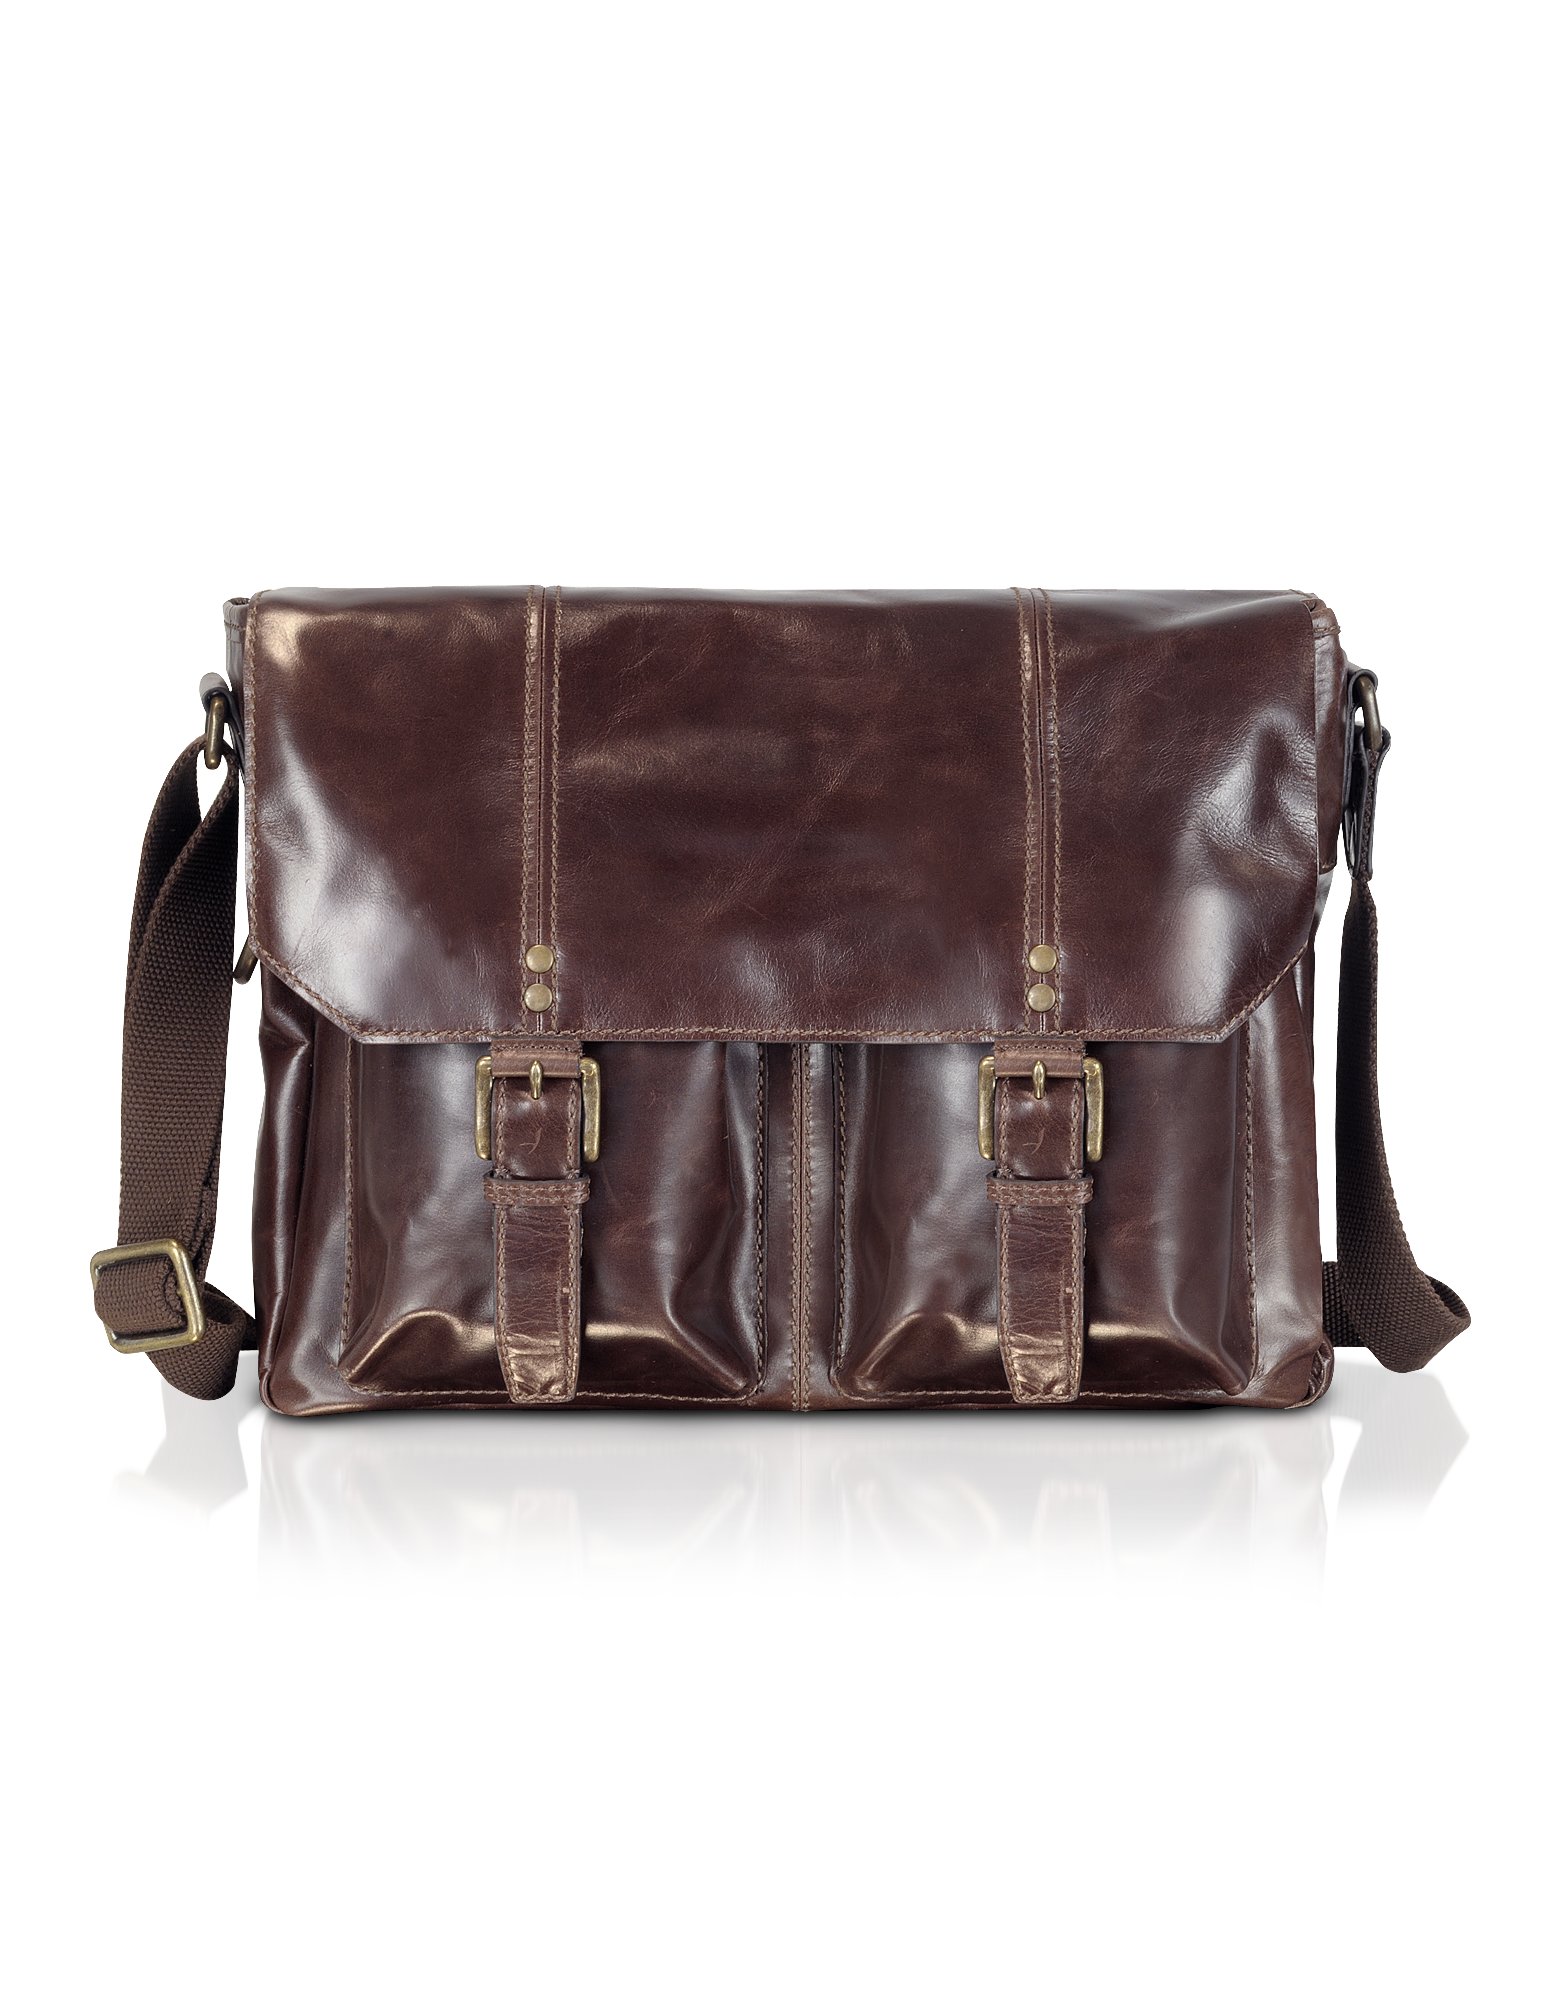 Lyst - Fossil Dayton - Leather Messenger Bag in Brown for Men